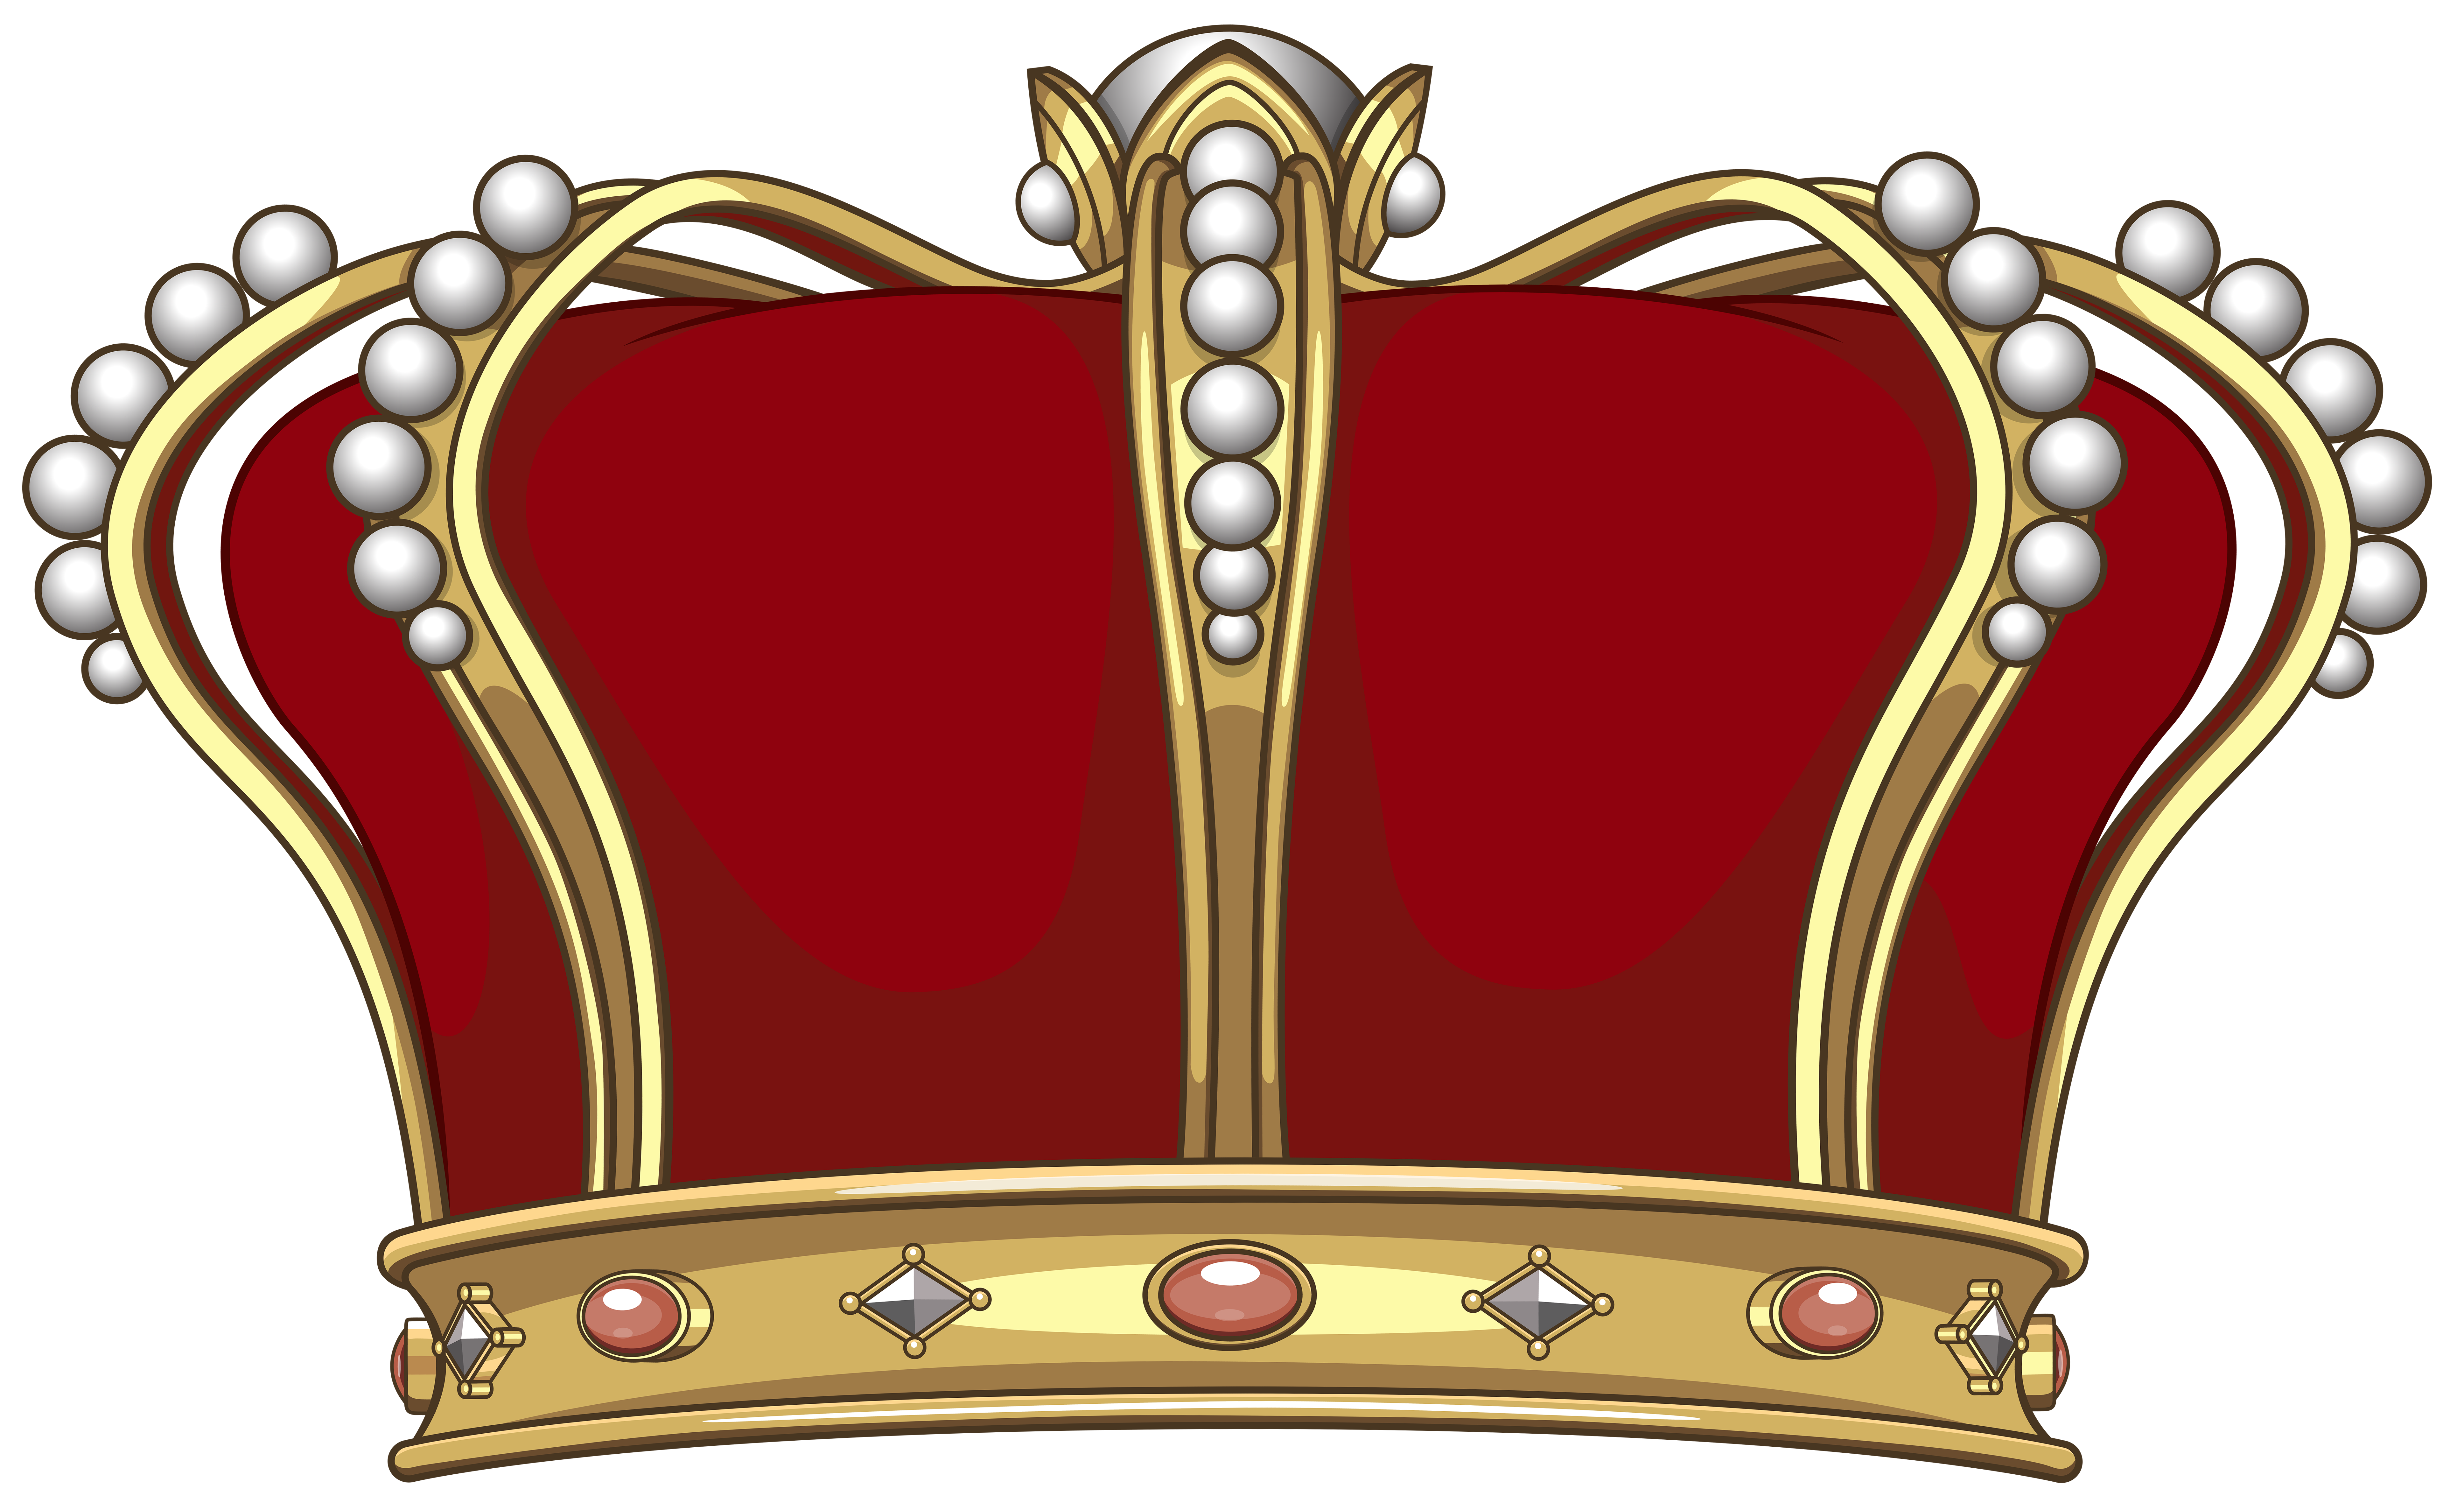 crowns clipart kingcrown